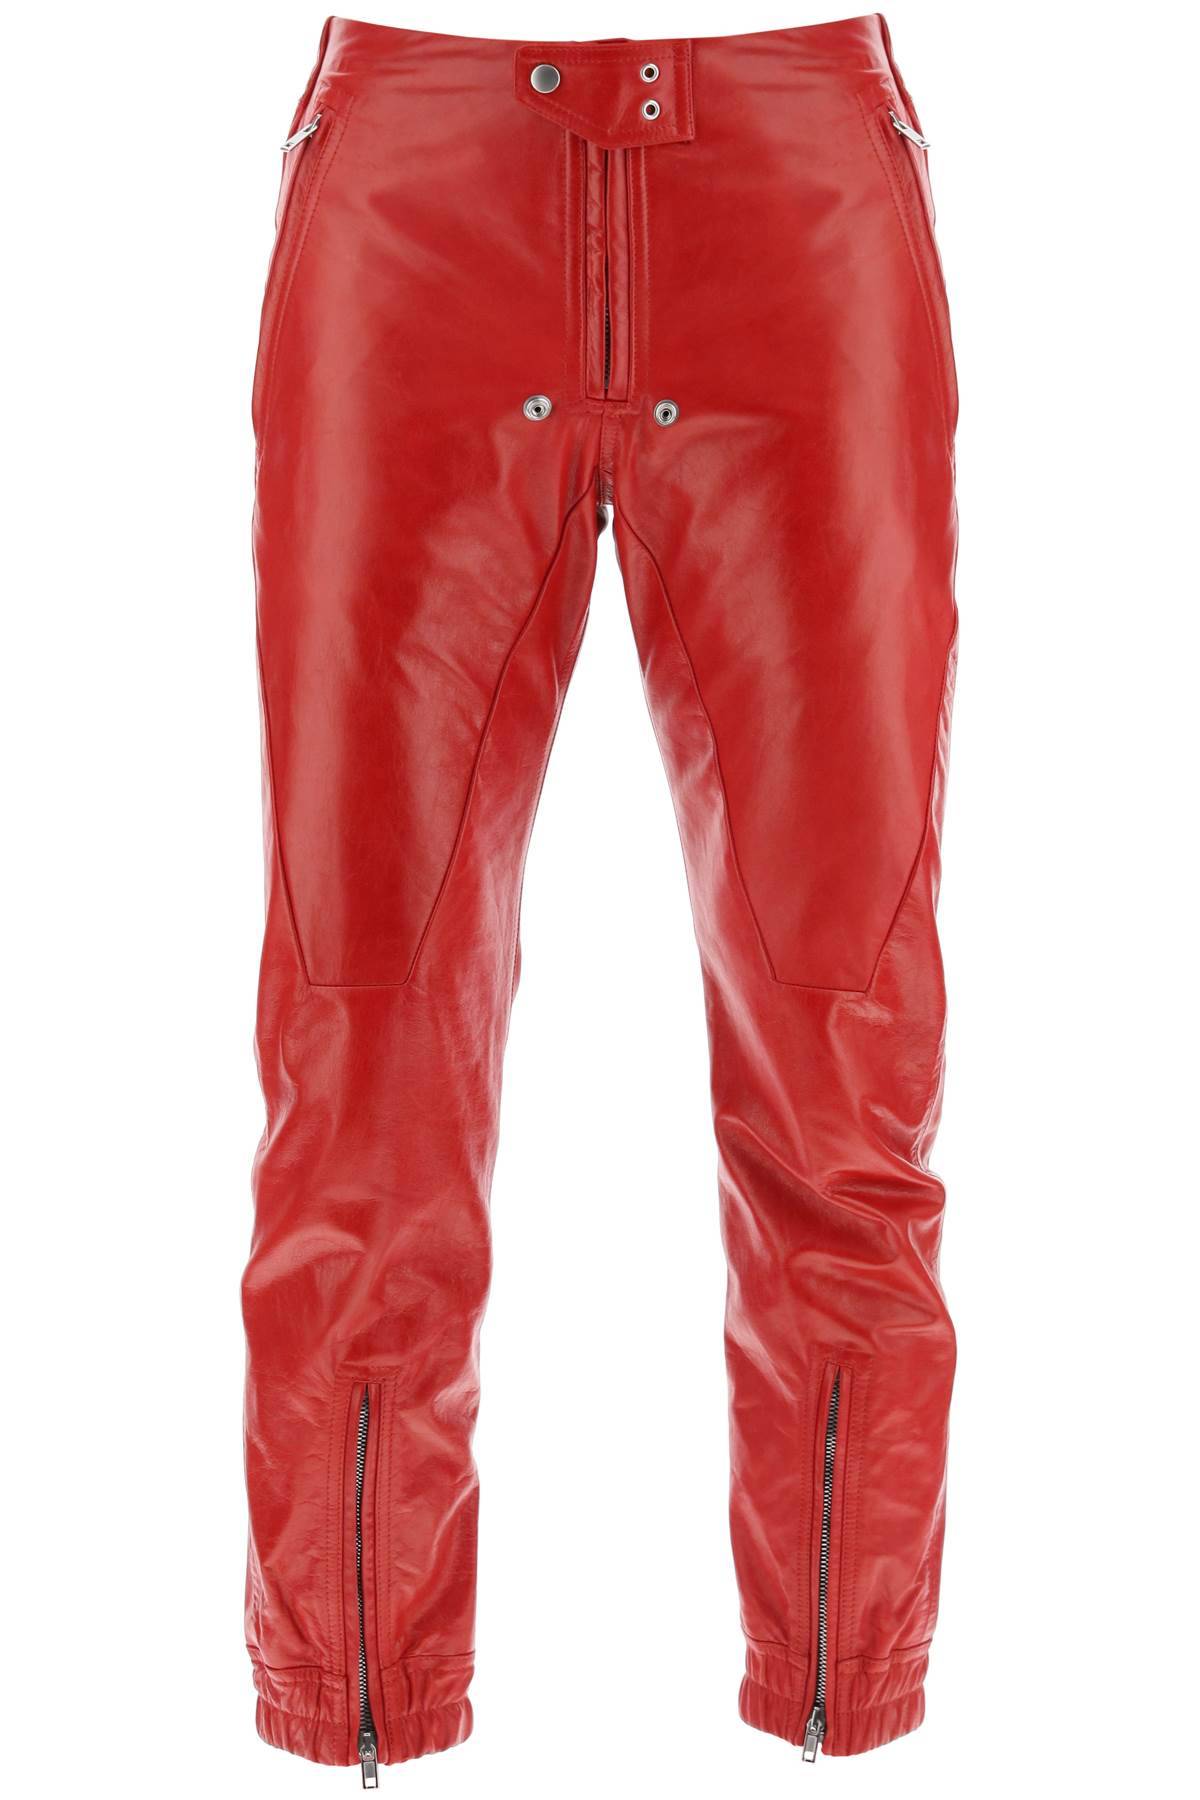 Rick Owens RICK OWENS luxor leather pants for men